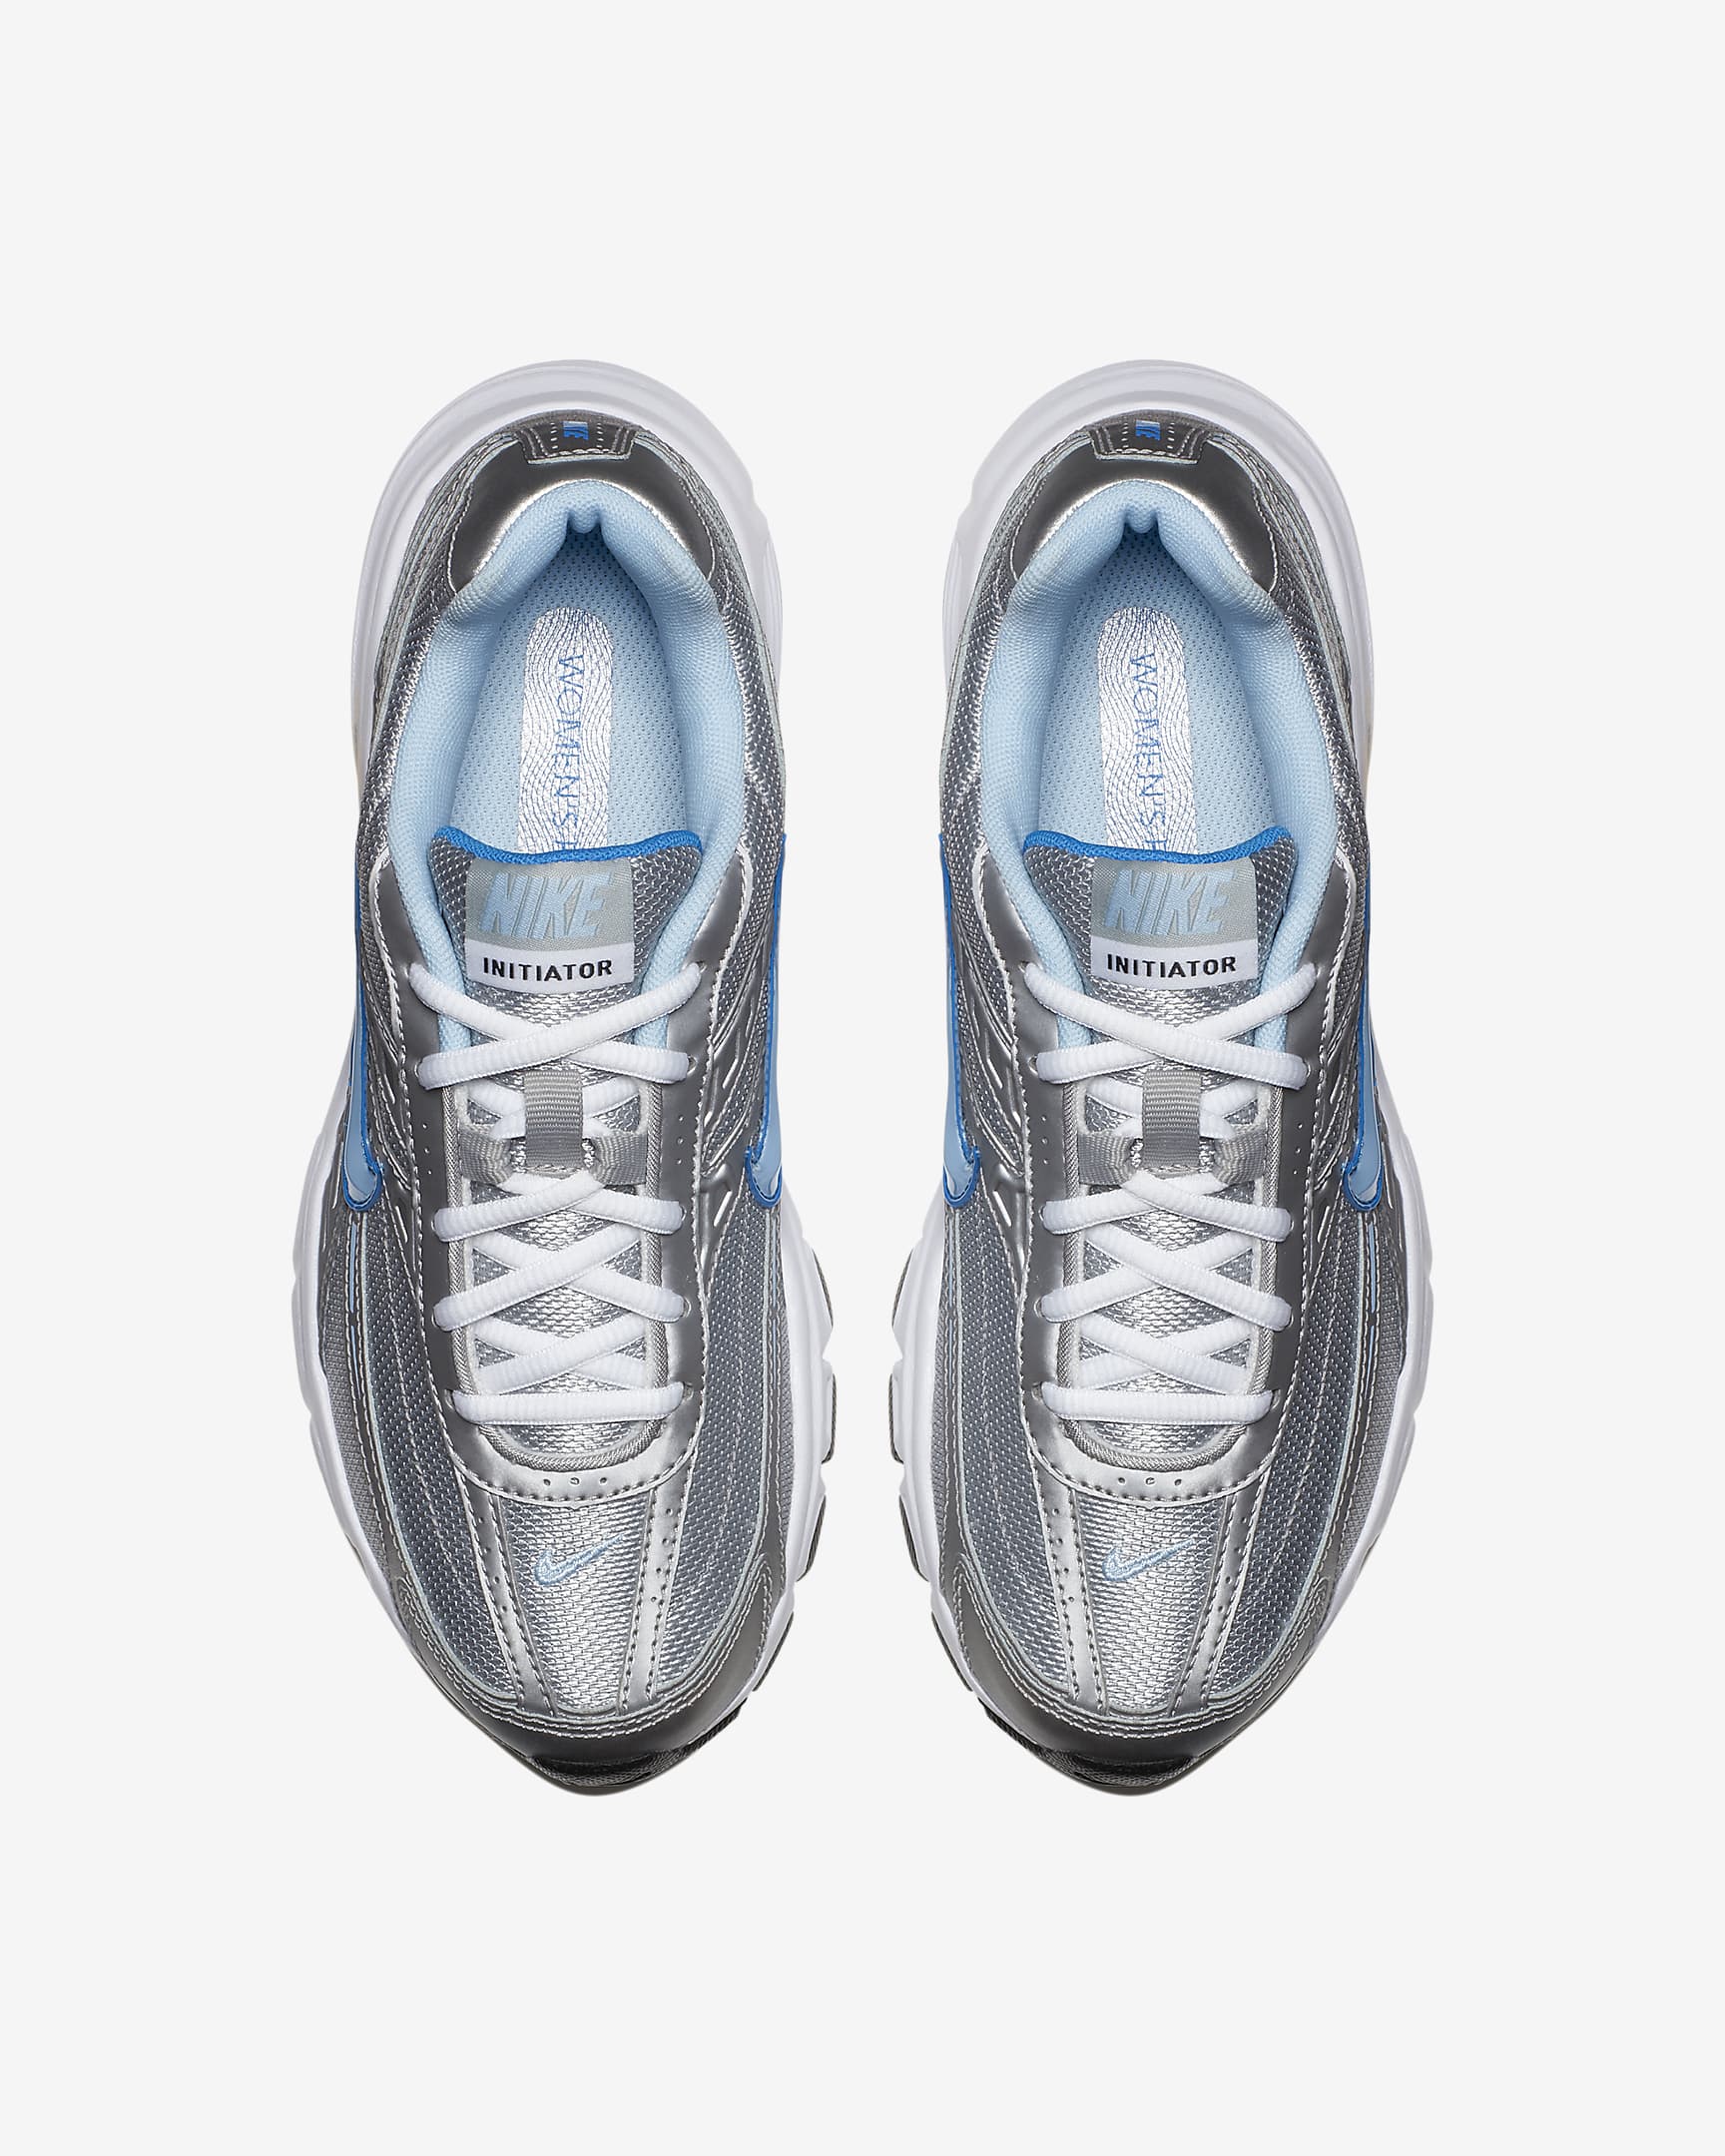 Nike Initiator Women's Shoes - Metallic Silver/White/Cool Grey/Ice Blue